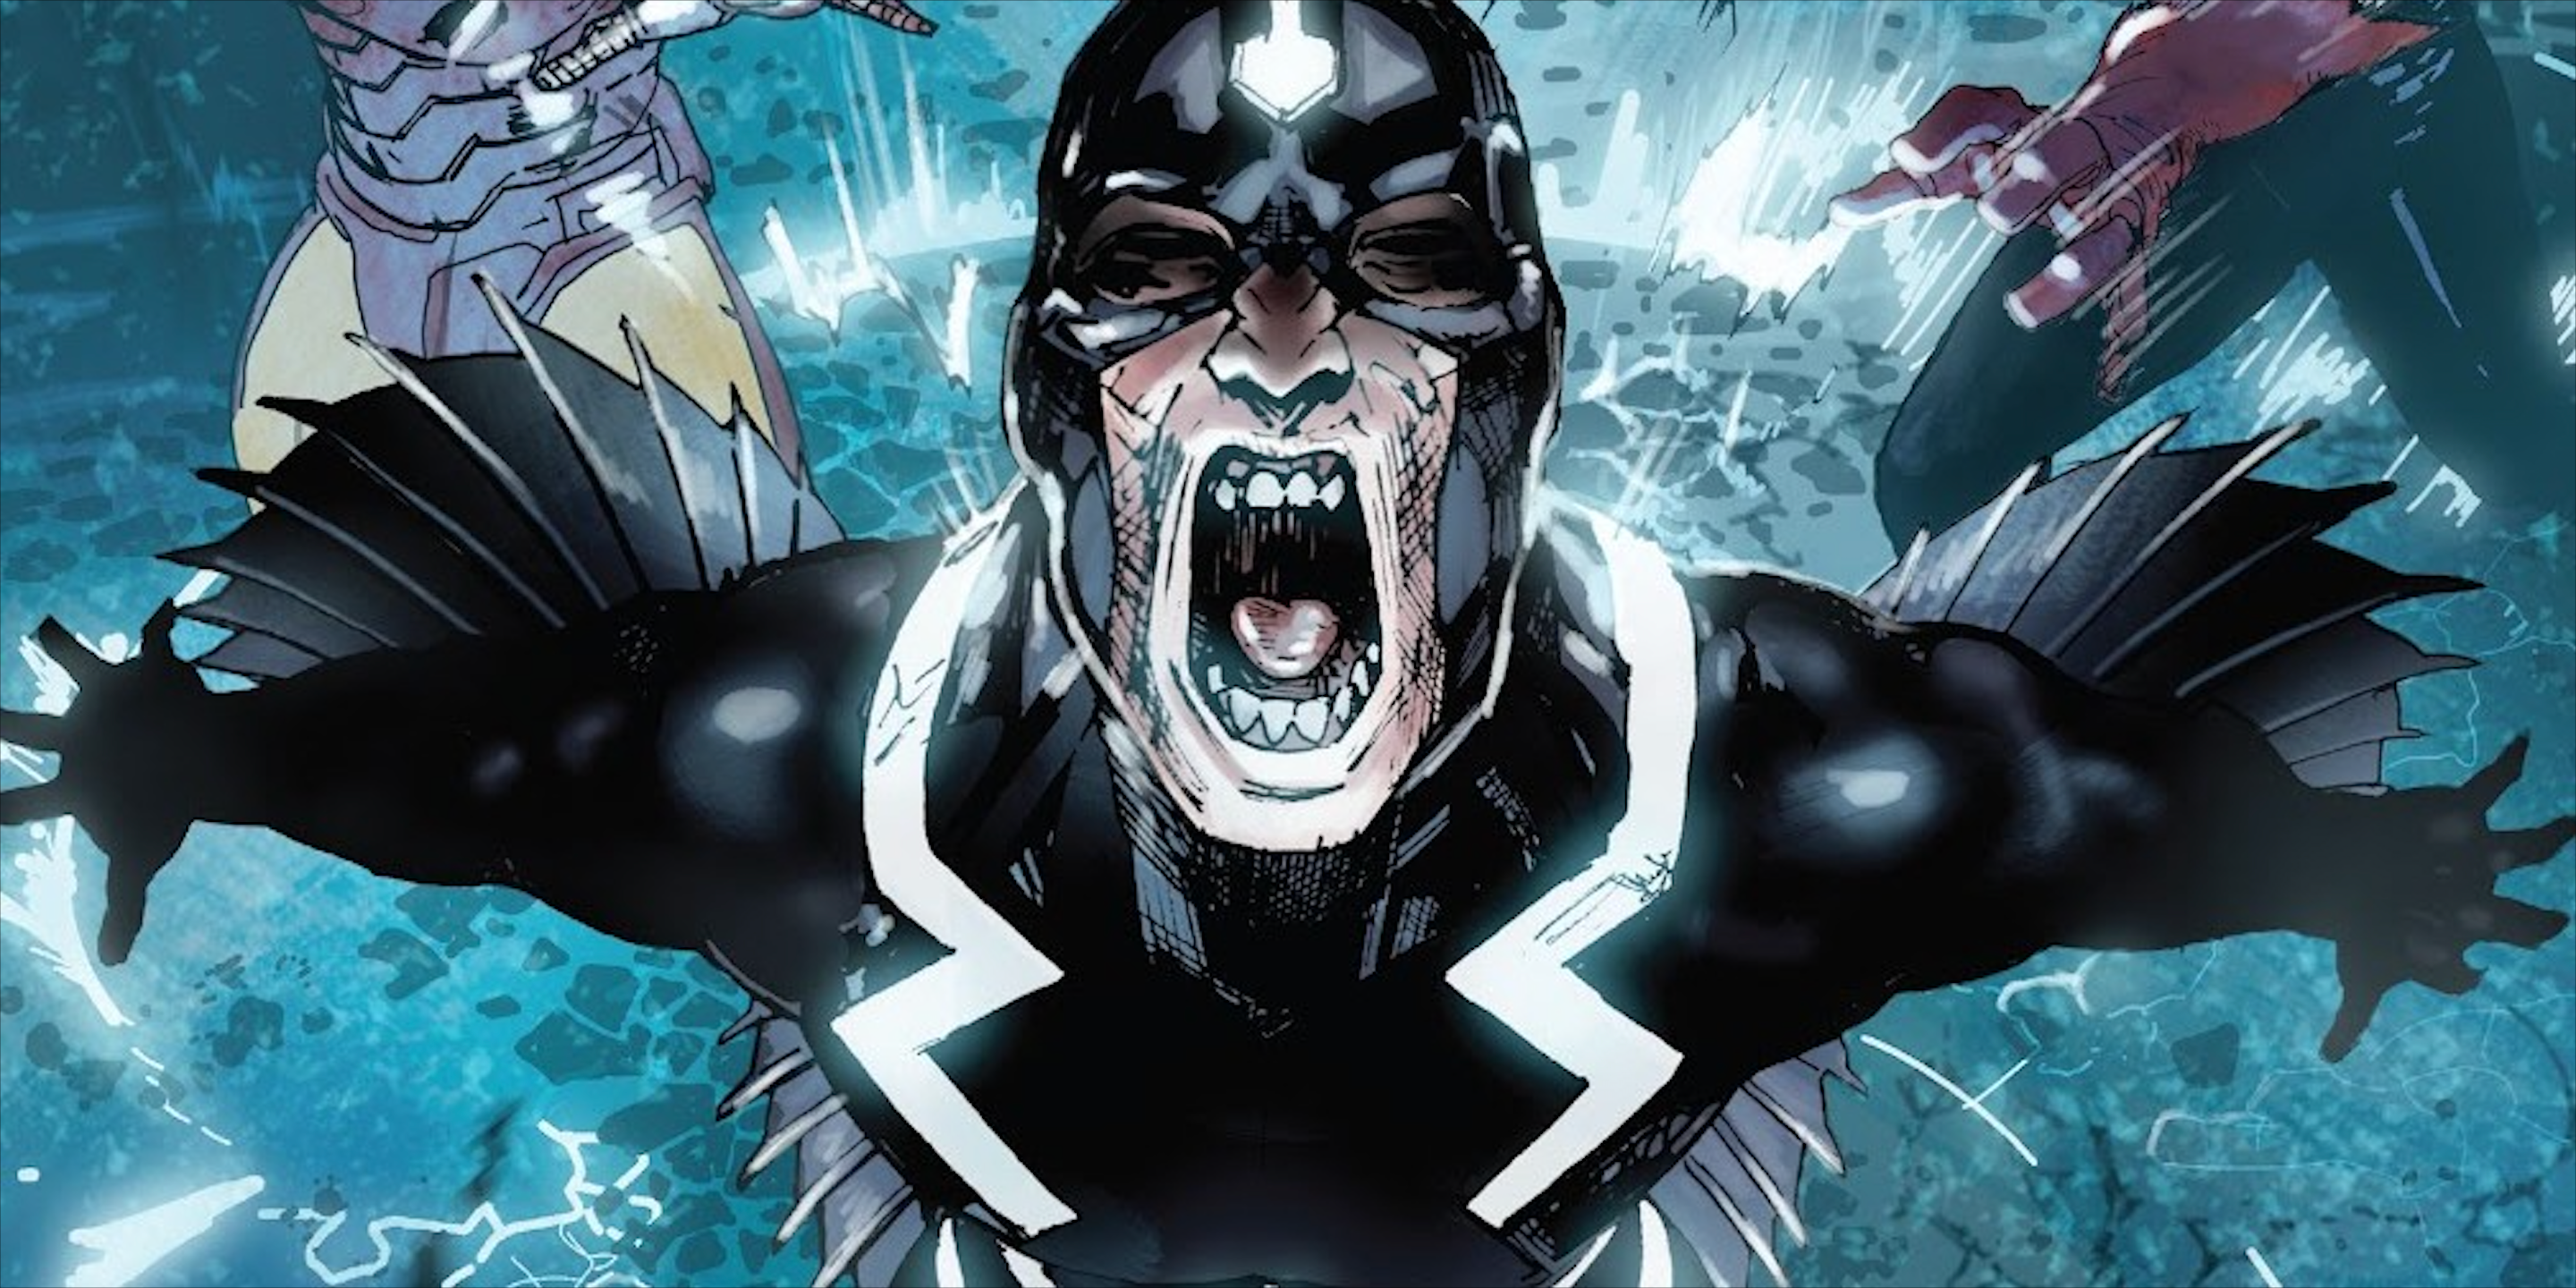 Black Bolt screams in Marvel Comics 